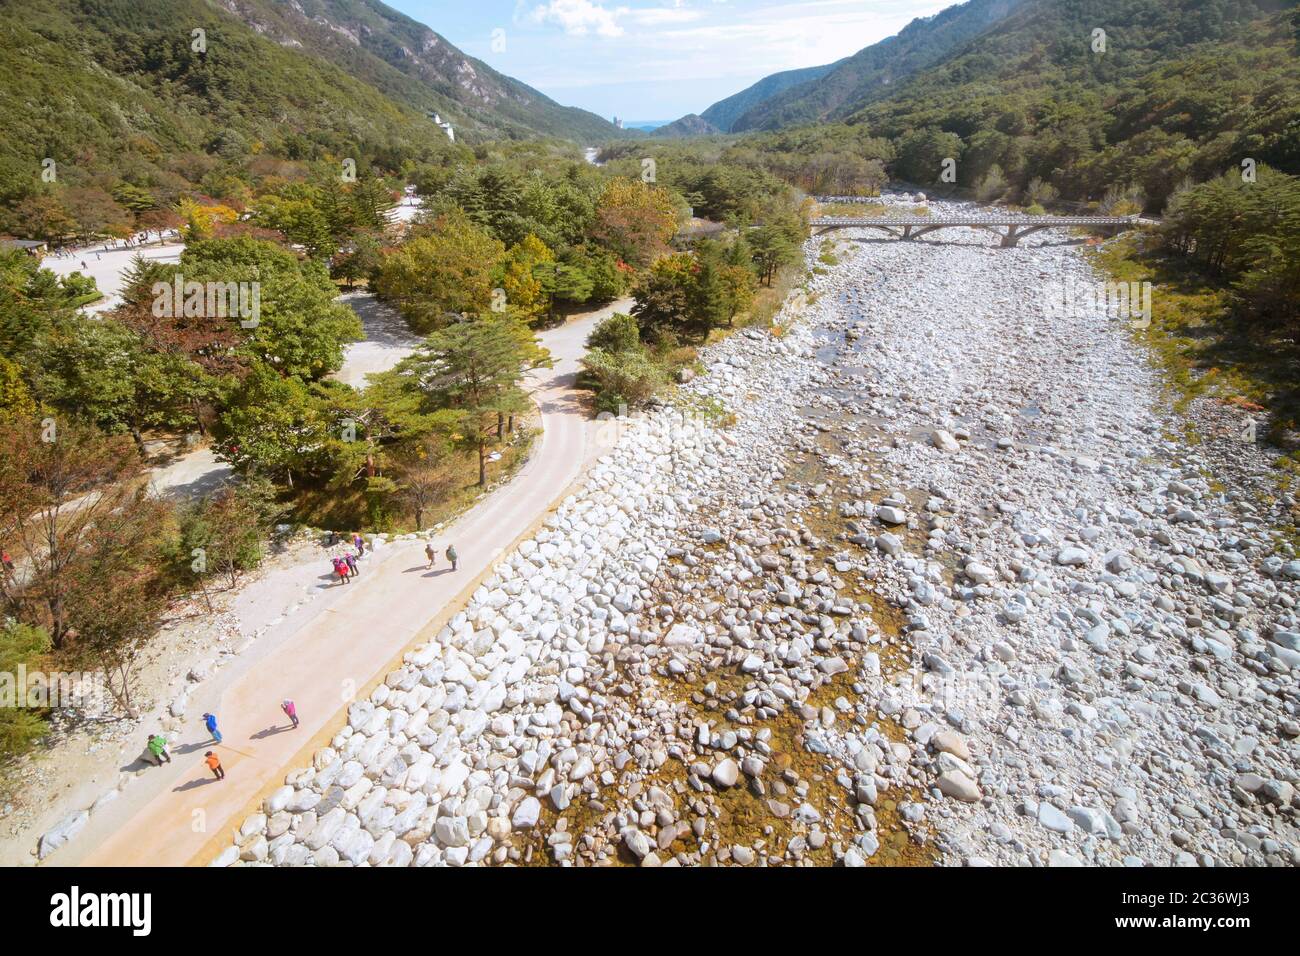 Dried up river bank at Seoraksan mountain, South Korea. Stock Photo